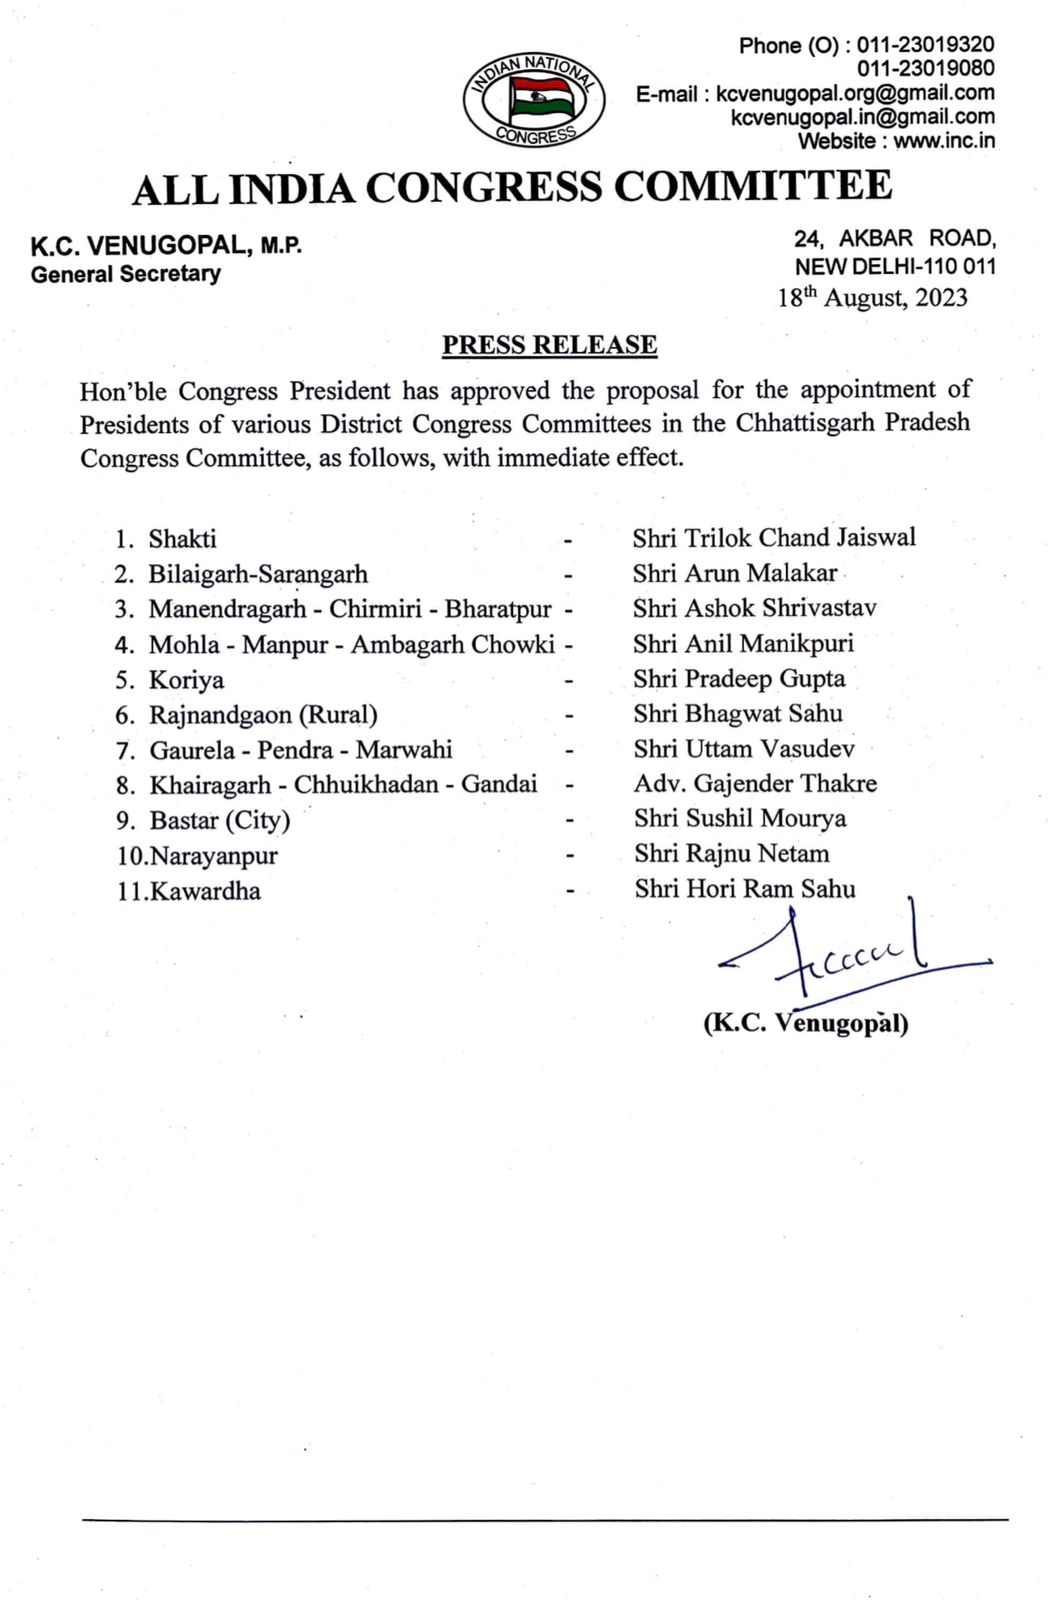 Appointment of 11 new district presidents in Chhattisgarh Congress, see list, Trilok Chand Jaiswal in Sakti, Ashok Srivastava in Manendragarh, Anil Manikpuri in Mohla-Manpur, Pradeep Gupta in Korea, Uttam Vasudev in Pendra-Marwahi, Gajendra Thackeray in Khairagarh, Narayanpur  Rajnu Netam Khabargali